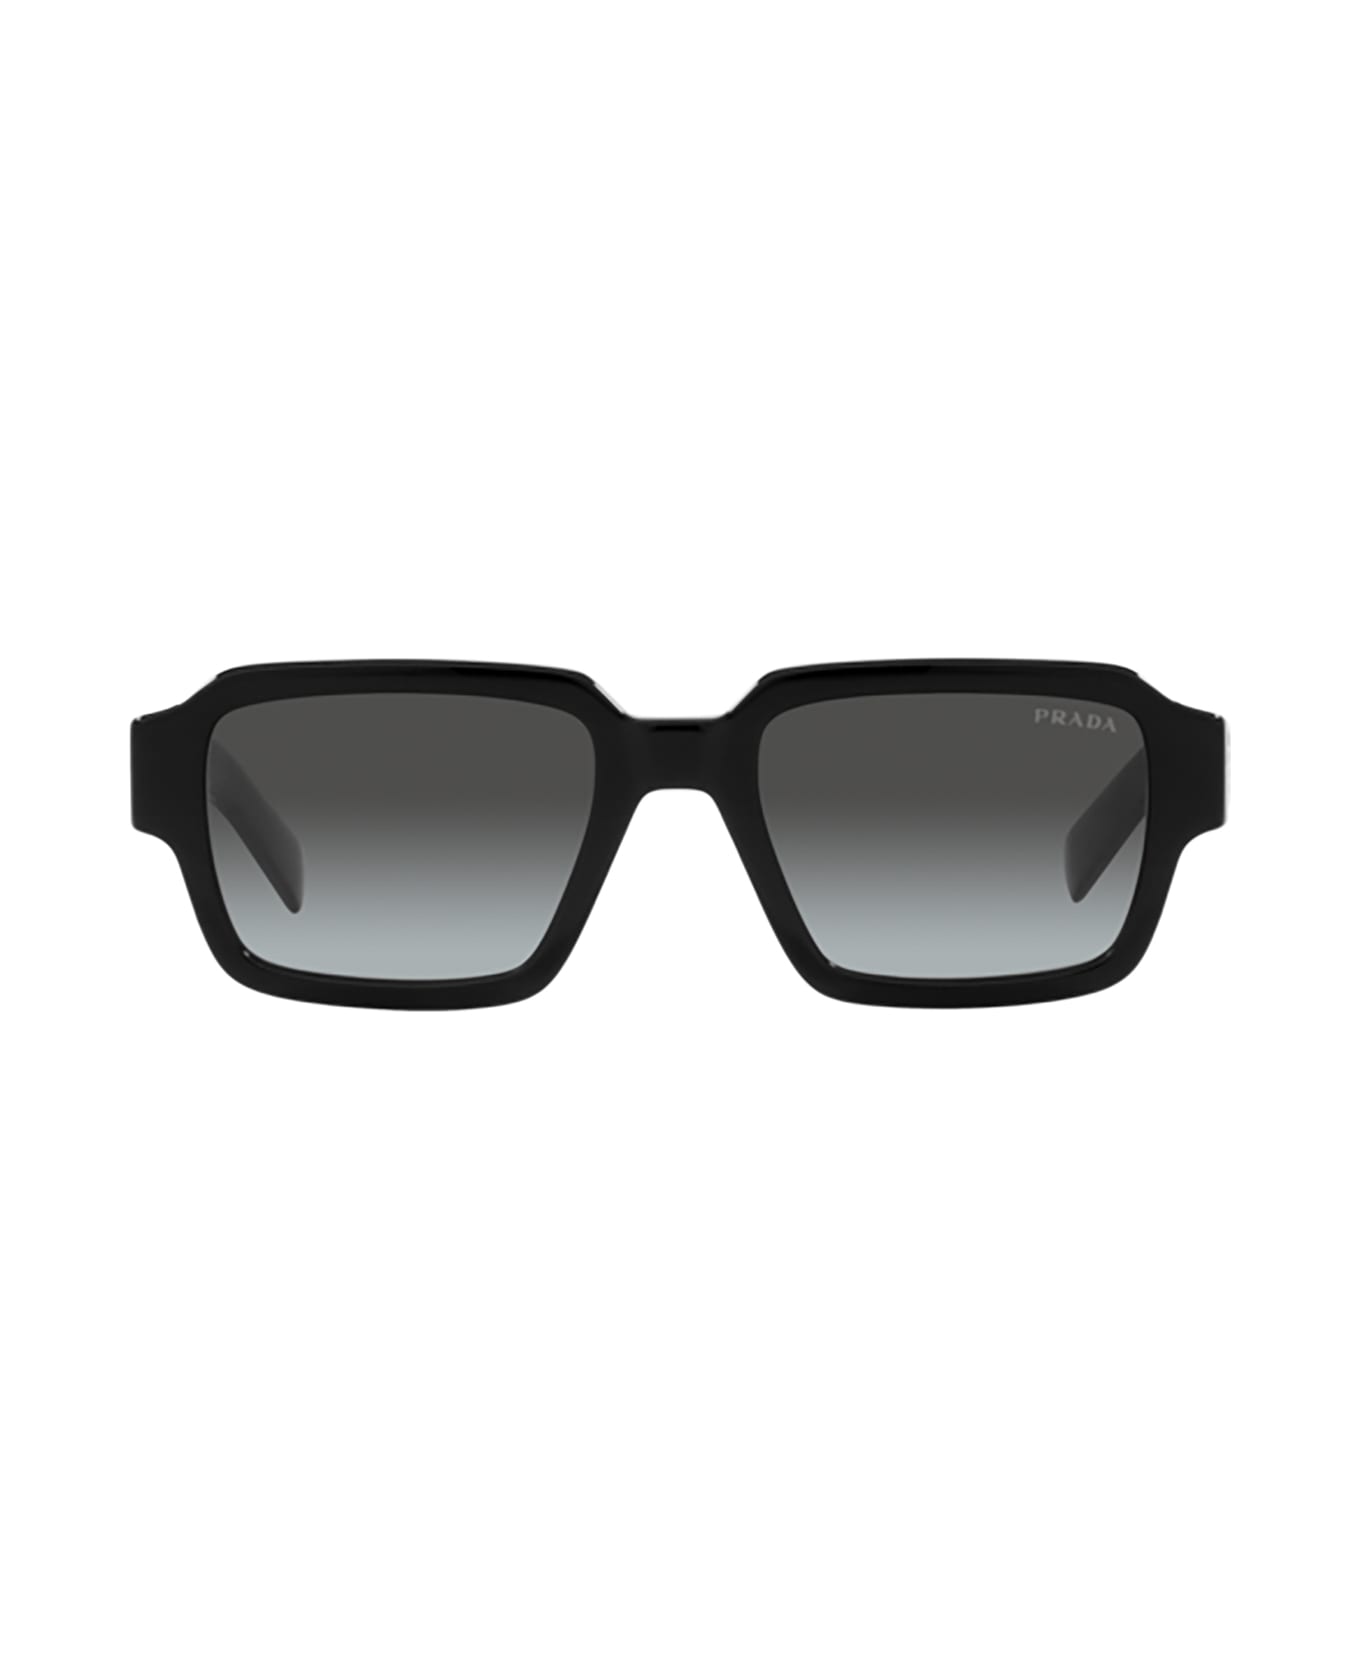 Prada Eyewear Pr 02zs Black Sunglasses - Black